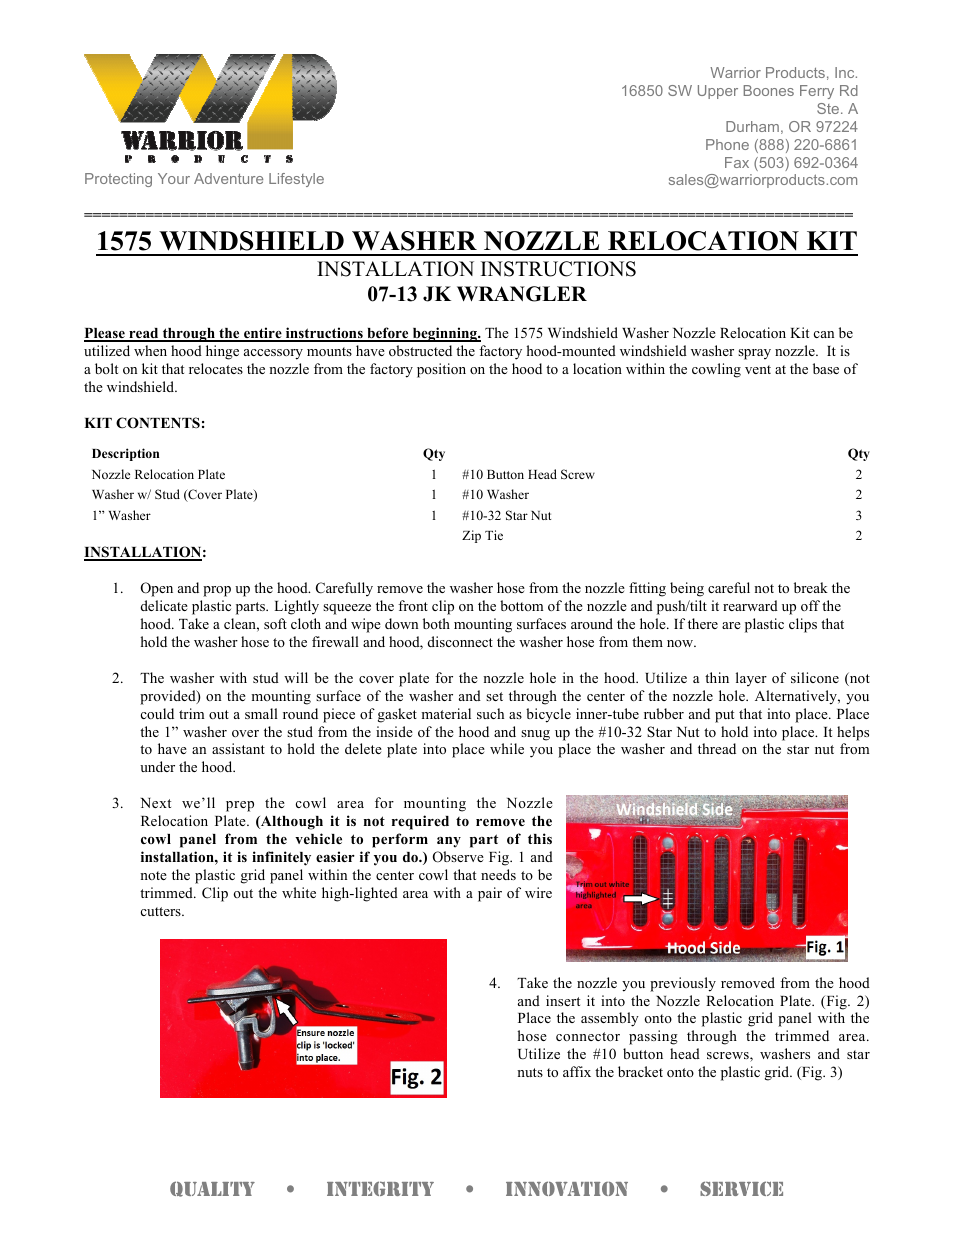 1575 WINDSHIELD WASHER NOZZLE RELOCATION KIT (2007 – 2013 Jeep JK Wrangler)